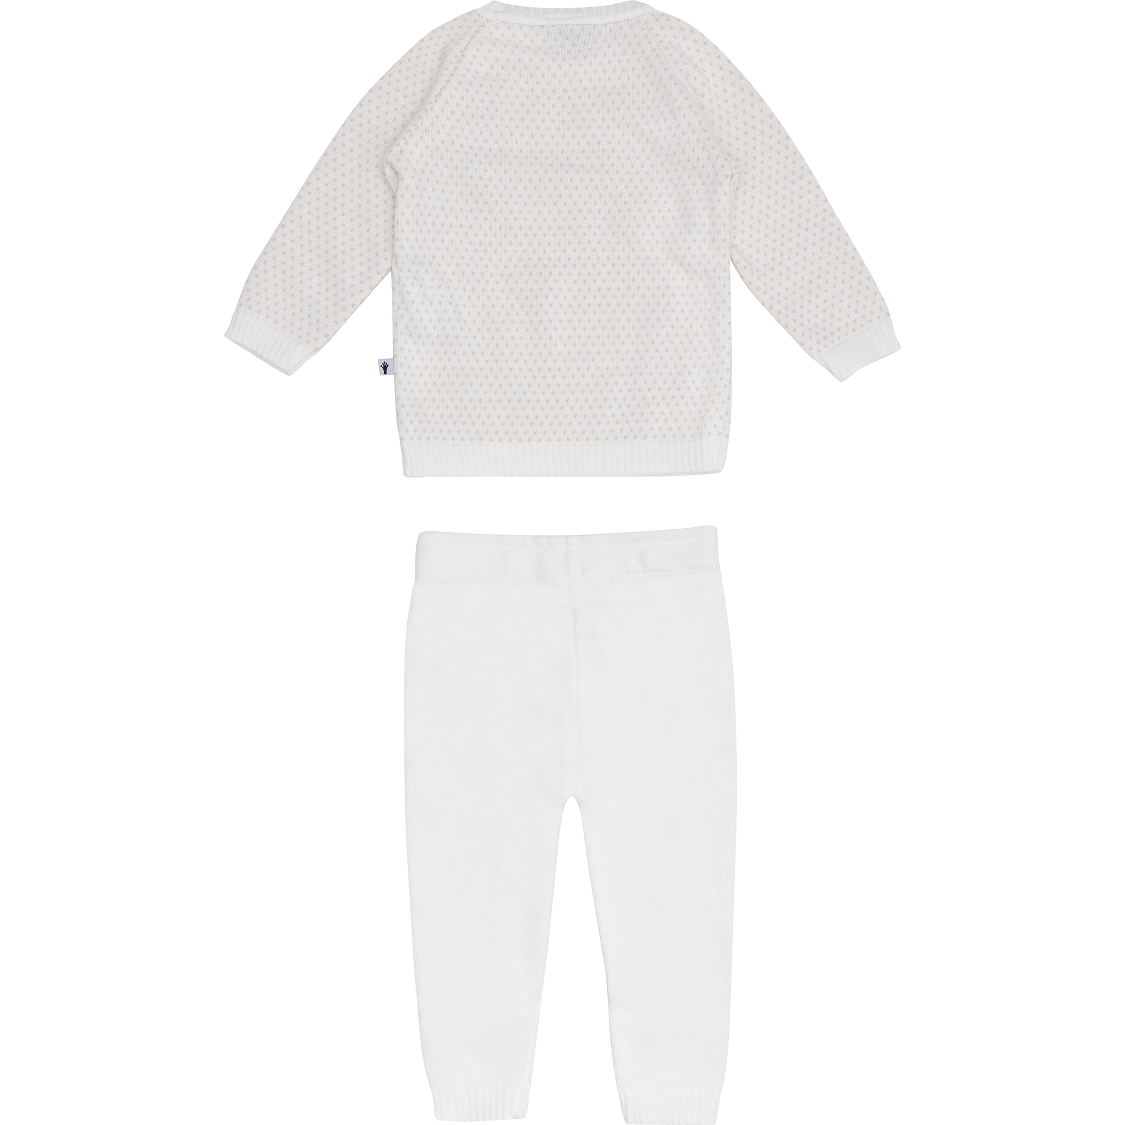 Klein Baby Organic Knitted Set - White